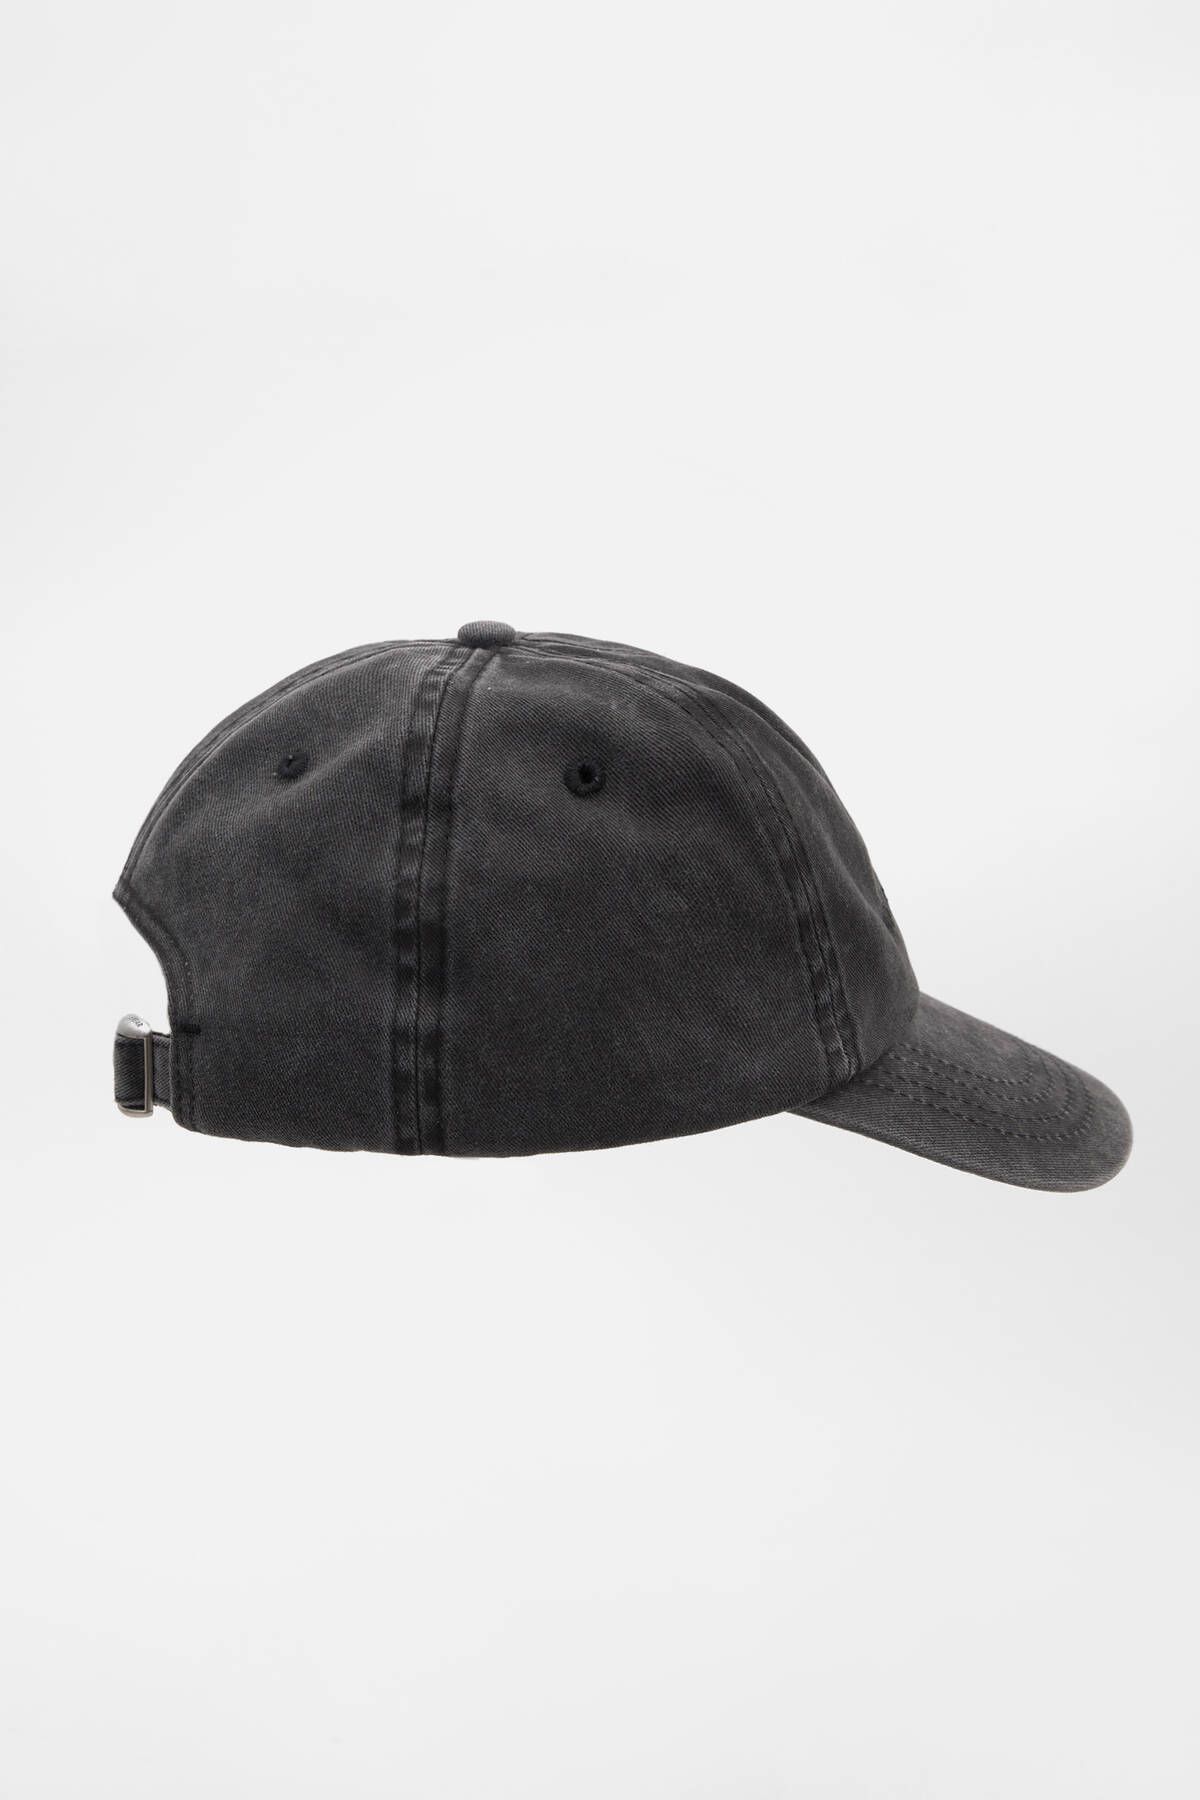 Pull & Bear کلاه سیاه با رنگ پریده و گلدوزی شده